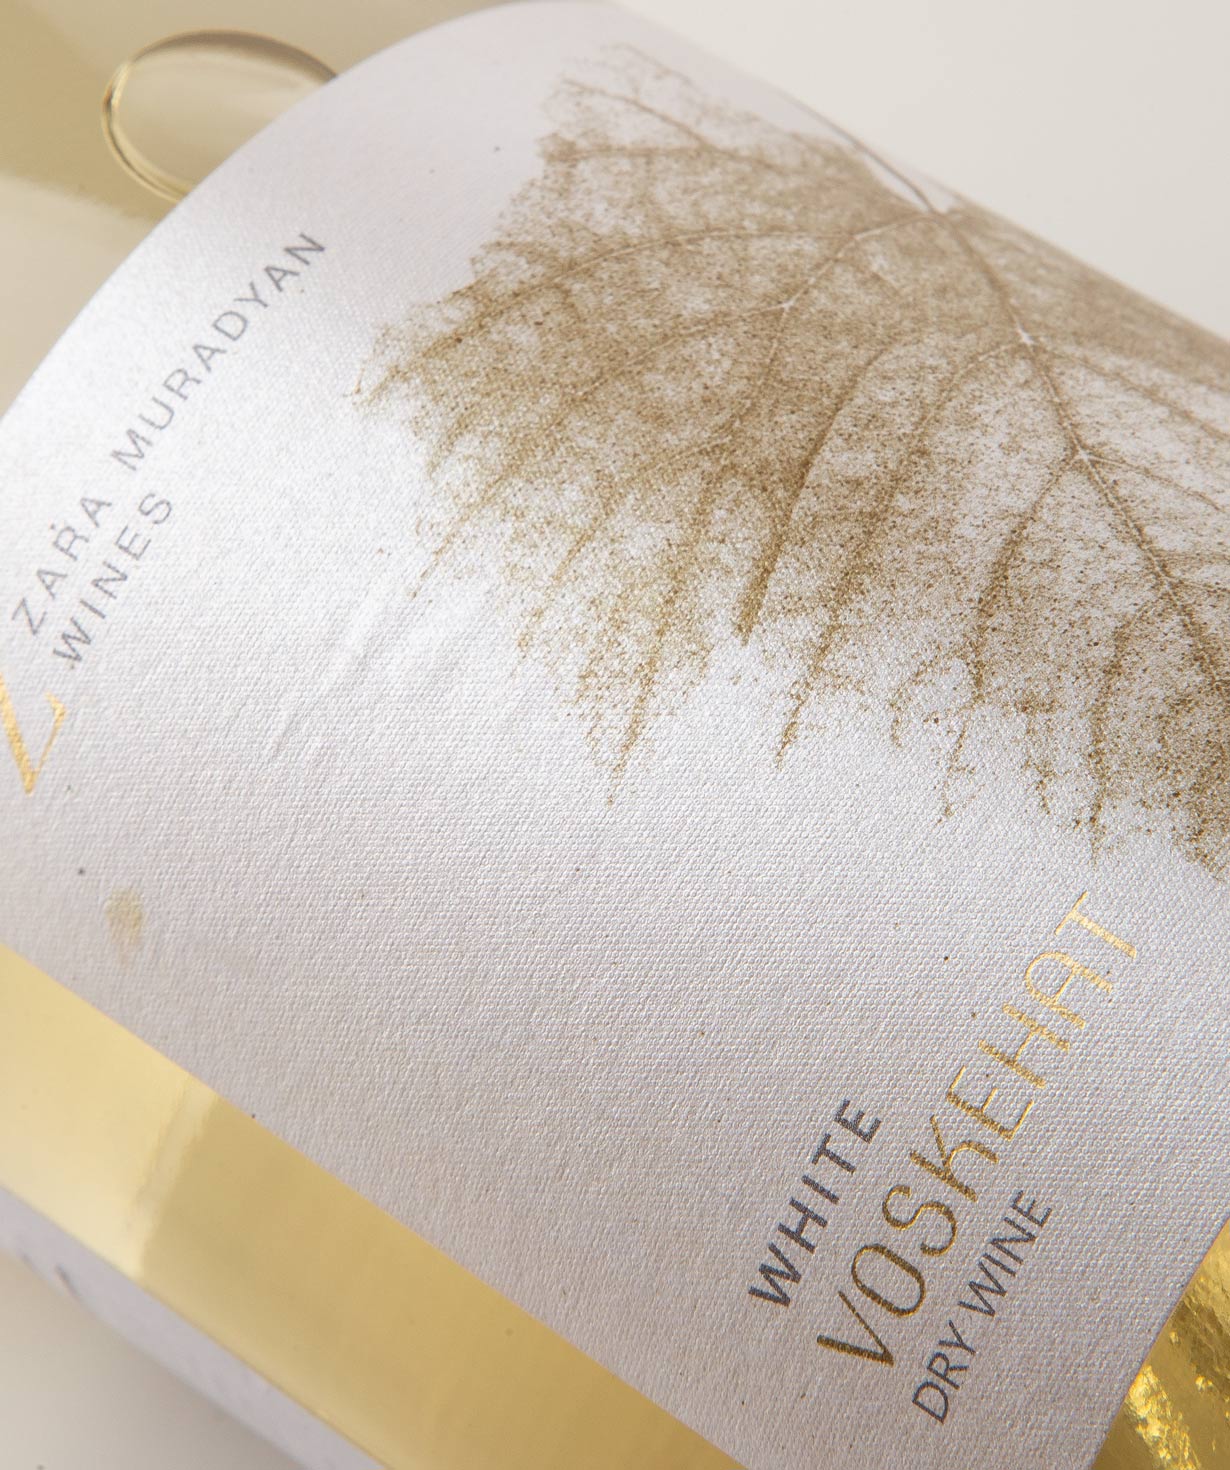 Вино «Zara Wine» белое, сухое, 12%, 750 мл